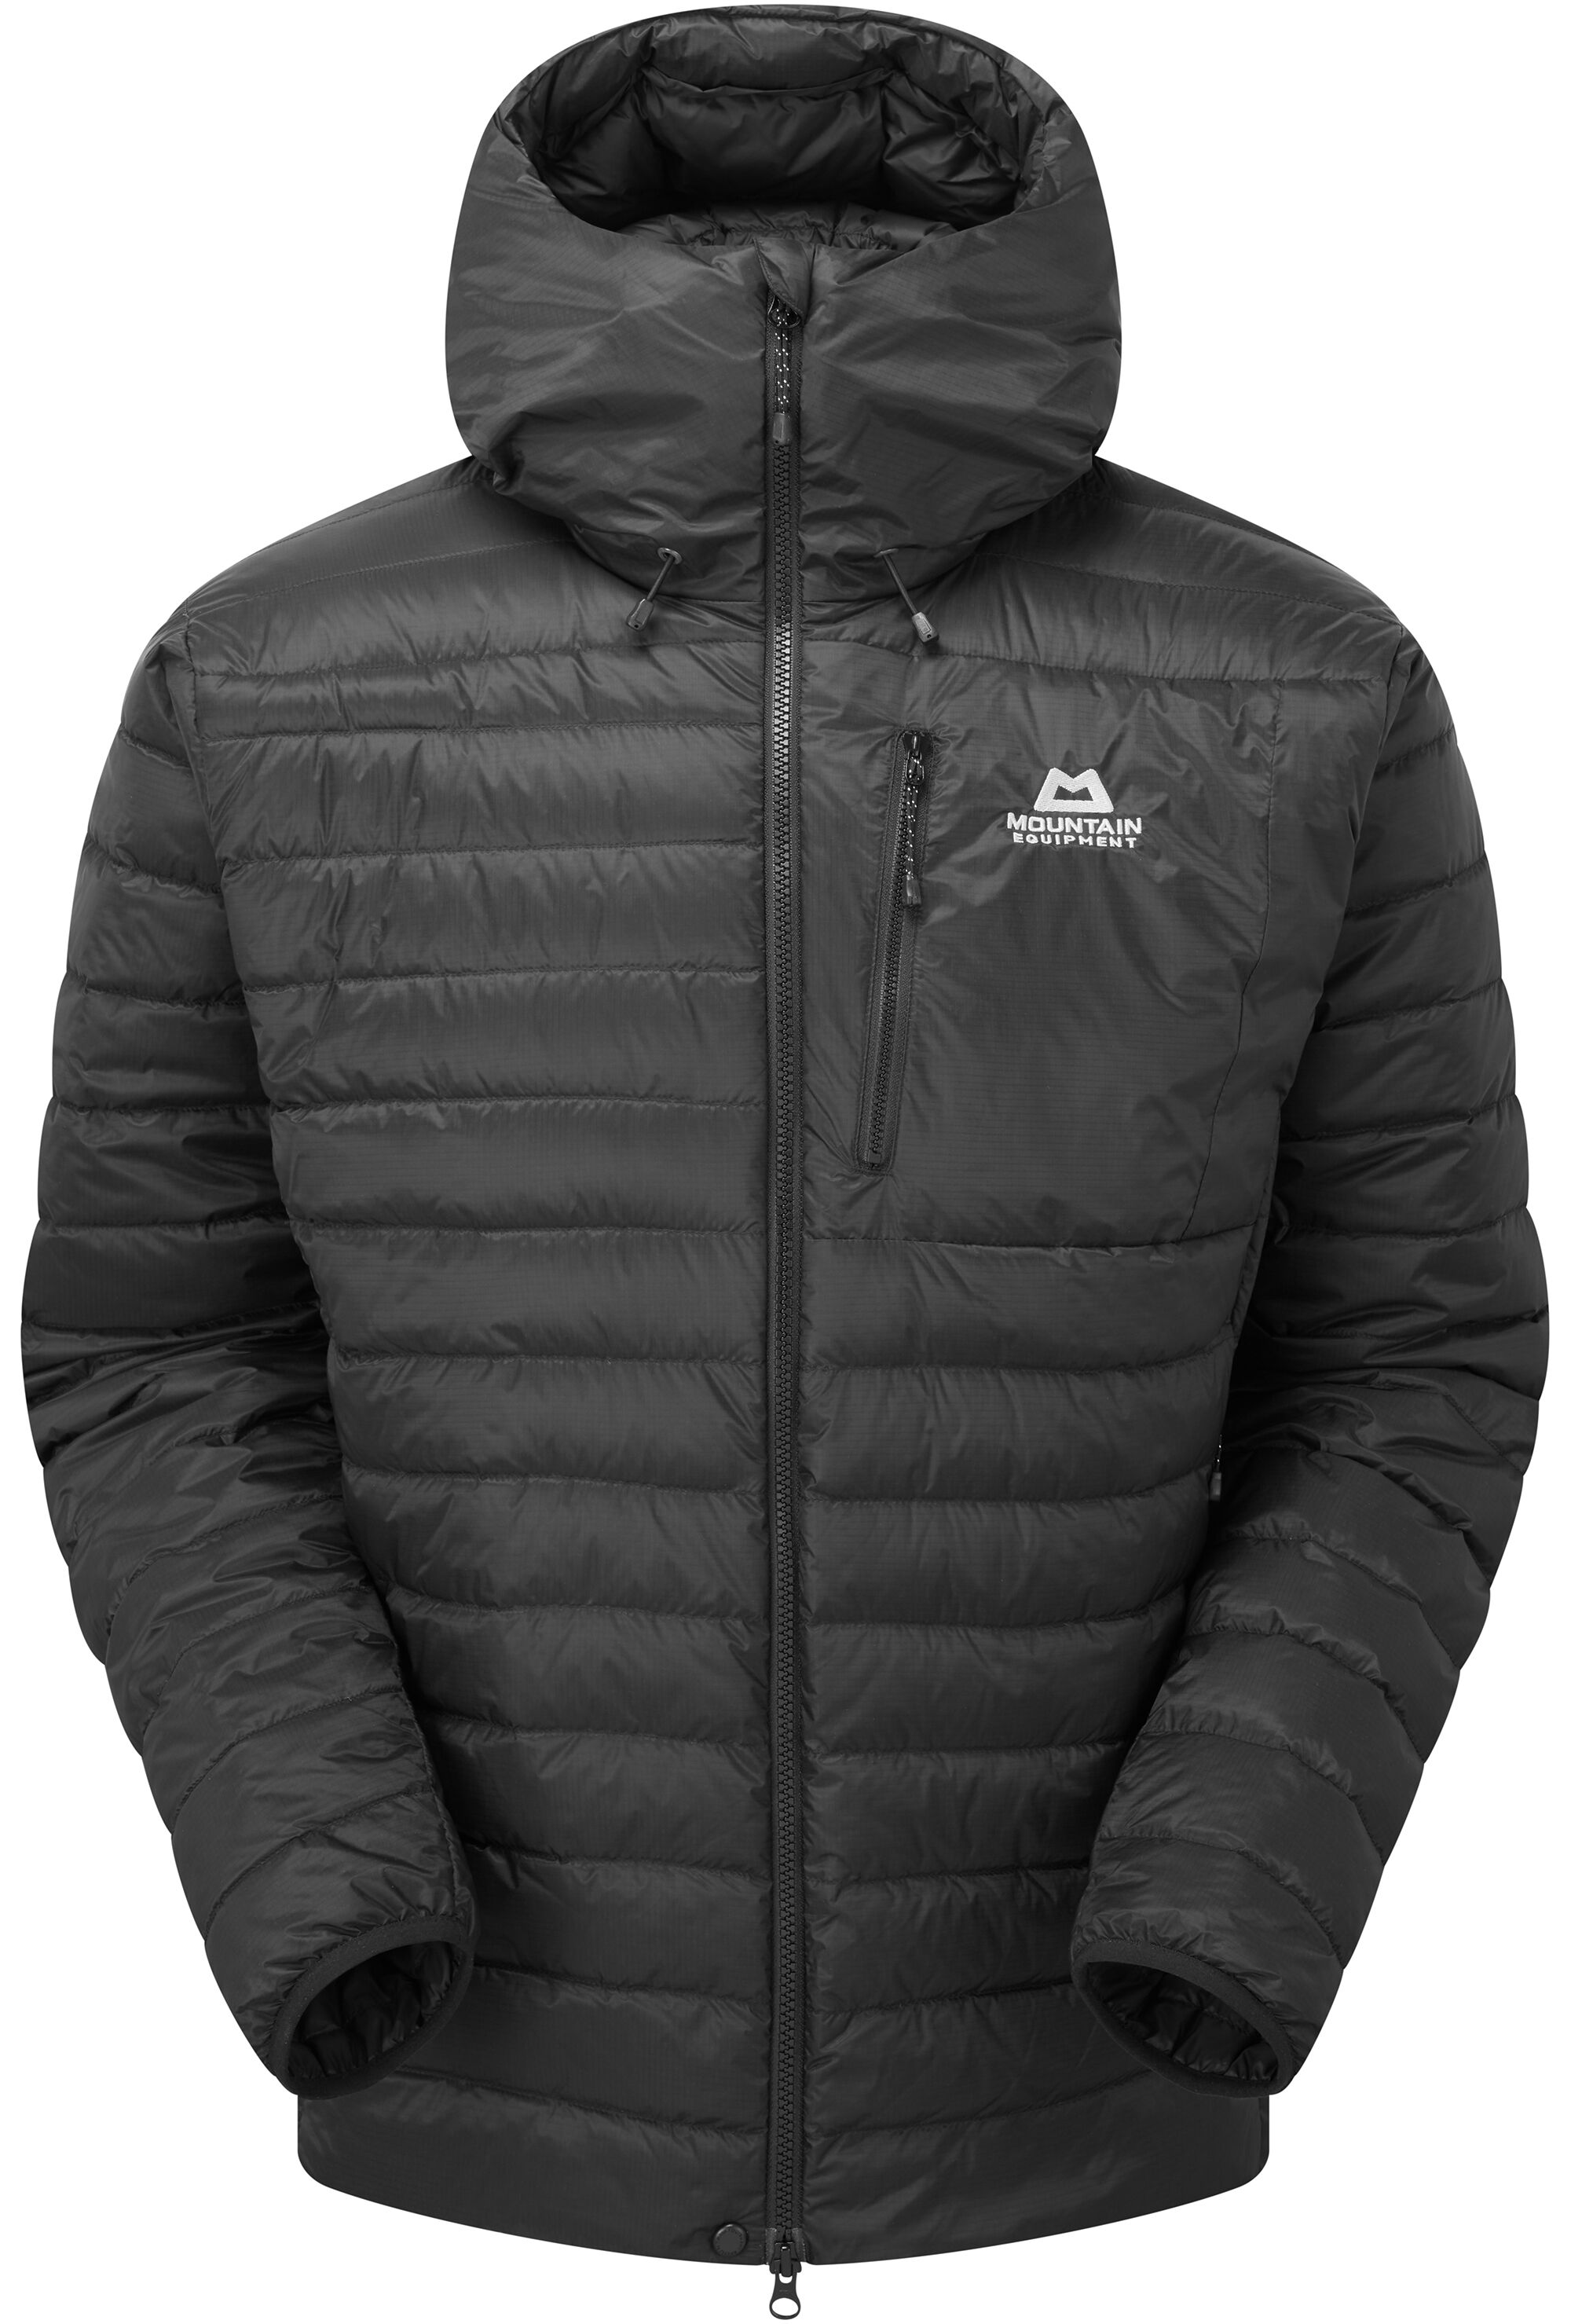 Mountain Equipment Baltoro Jacket - Down jacket - Men's